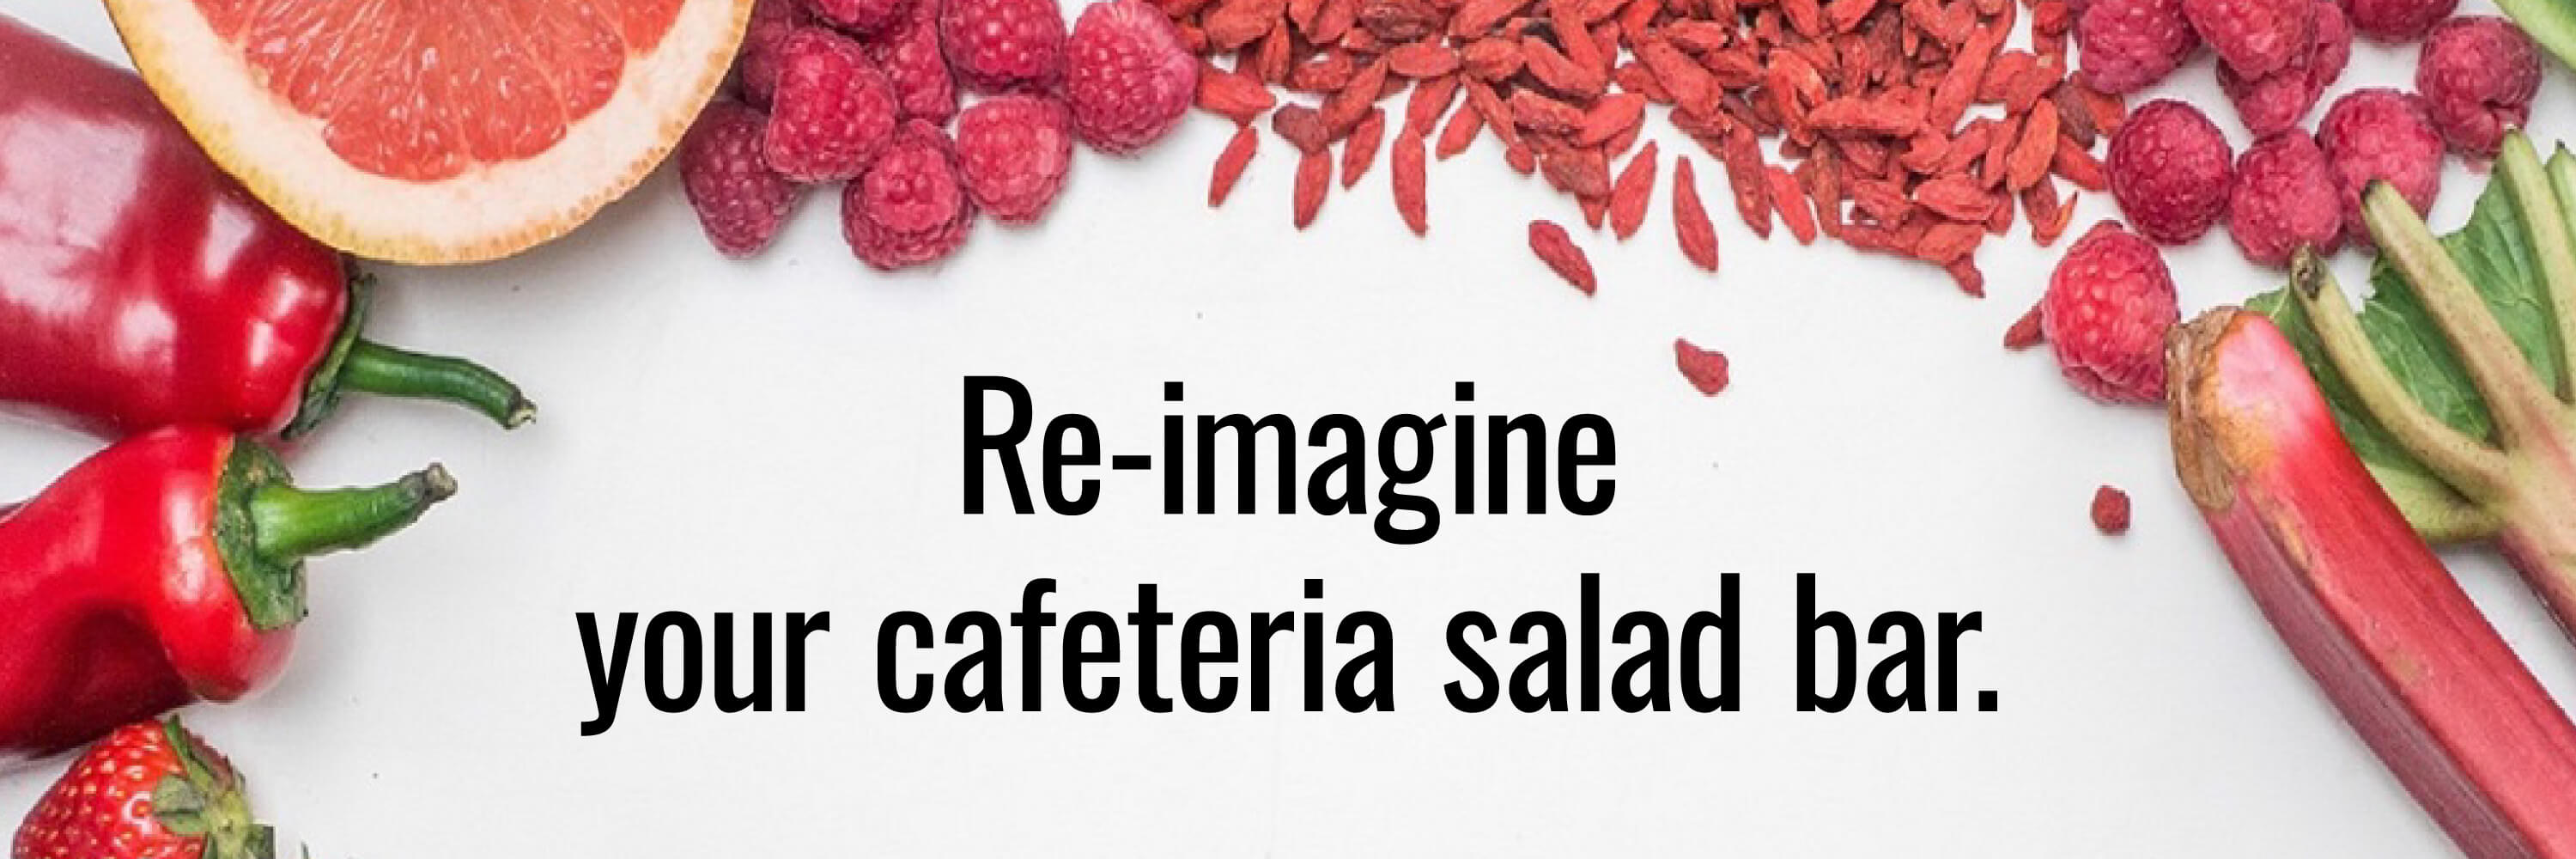 Re-imagine your cafeteria salad bar.